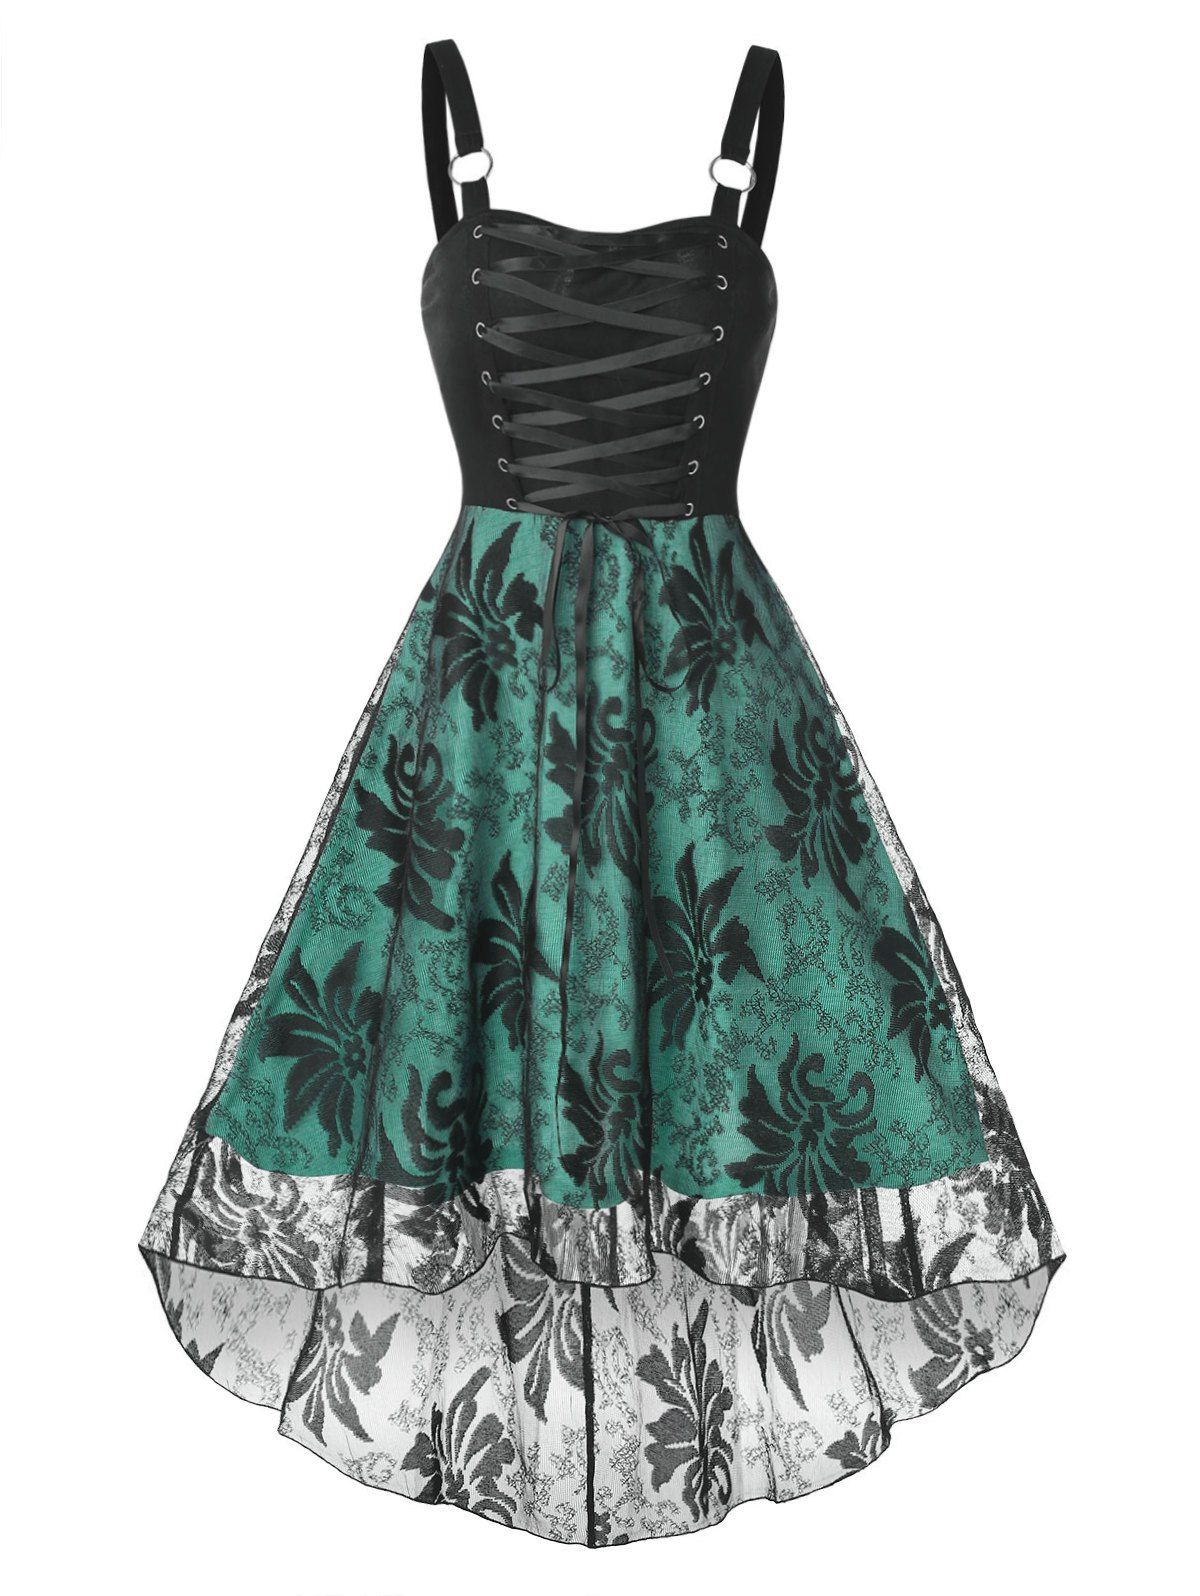 Vintage Contrast Lace Insert Lace Up High Low Midi Cami Dress - BLACK XXXL